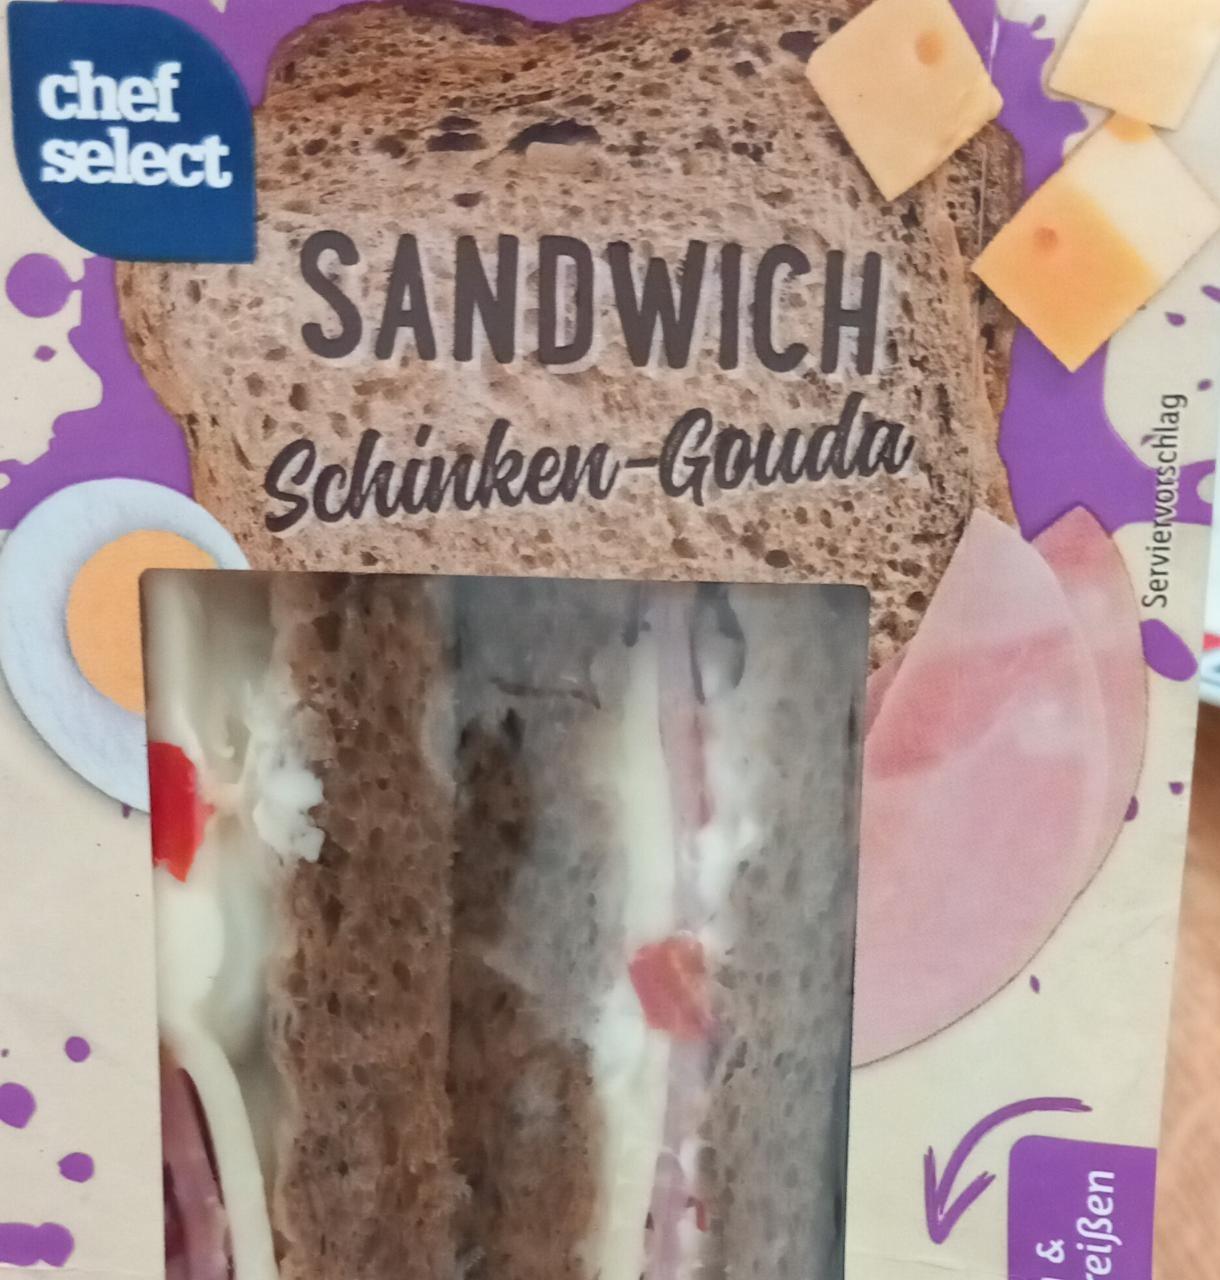 Fotografie - Sandwich Schinken-Gouda Chef Select